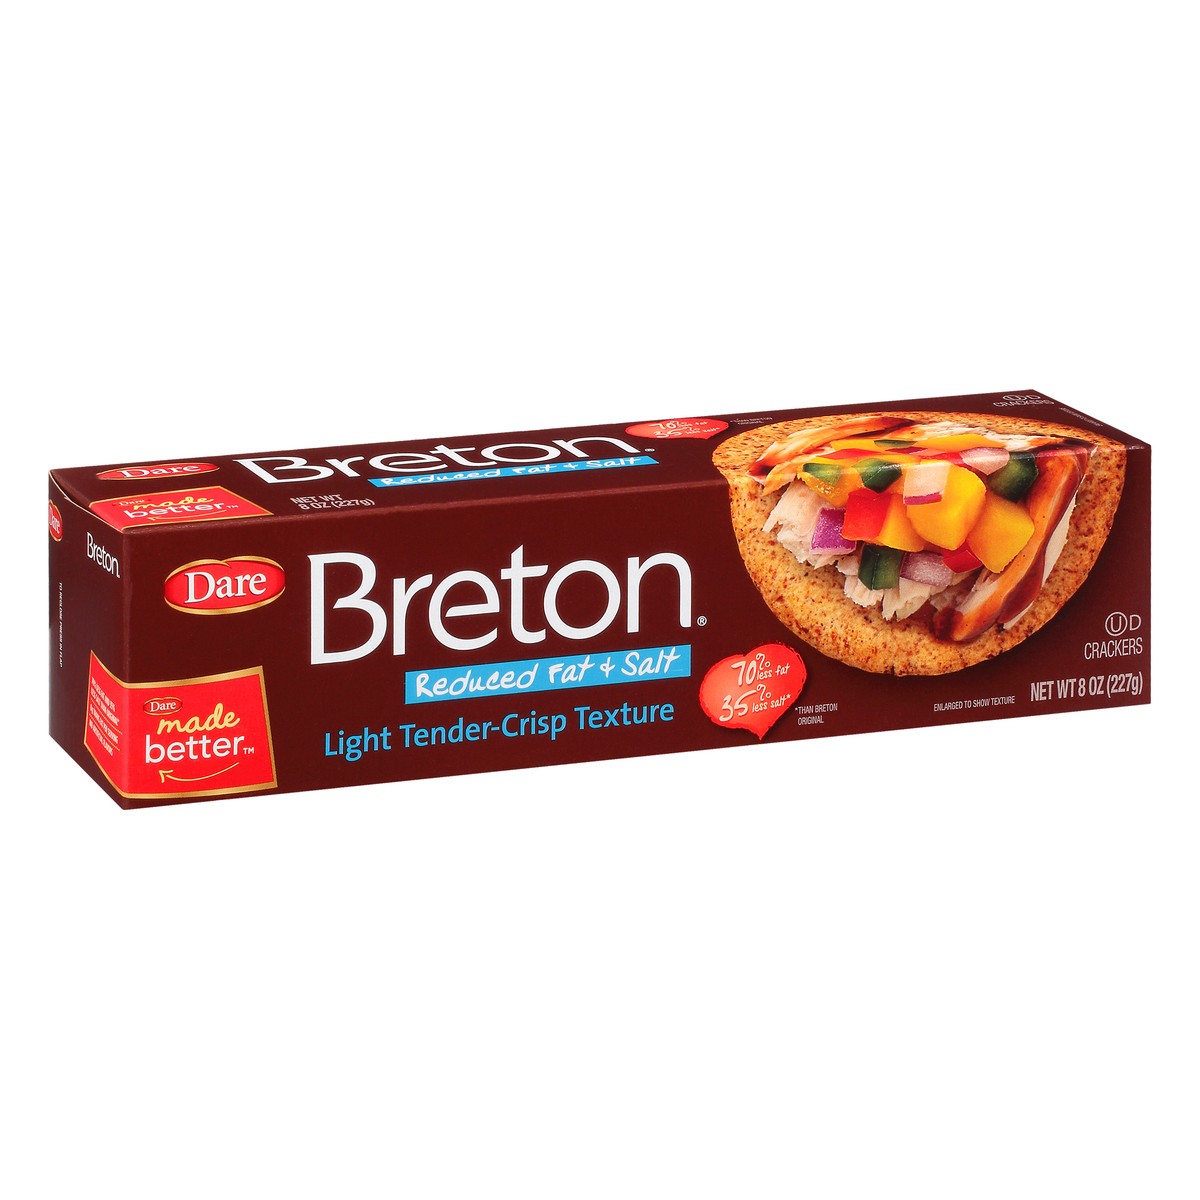 slide 8 of 13, Breton Dare Foods Breton Reduced Fat Salt Crackers, 8 oz